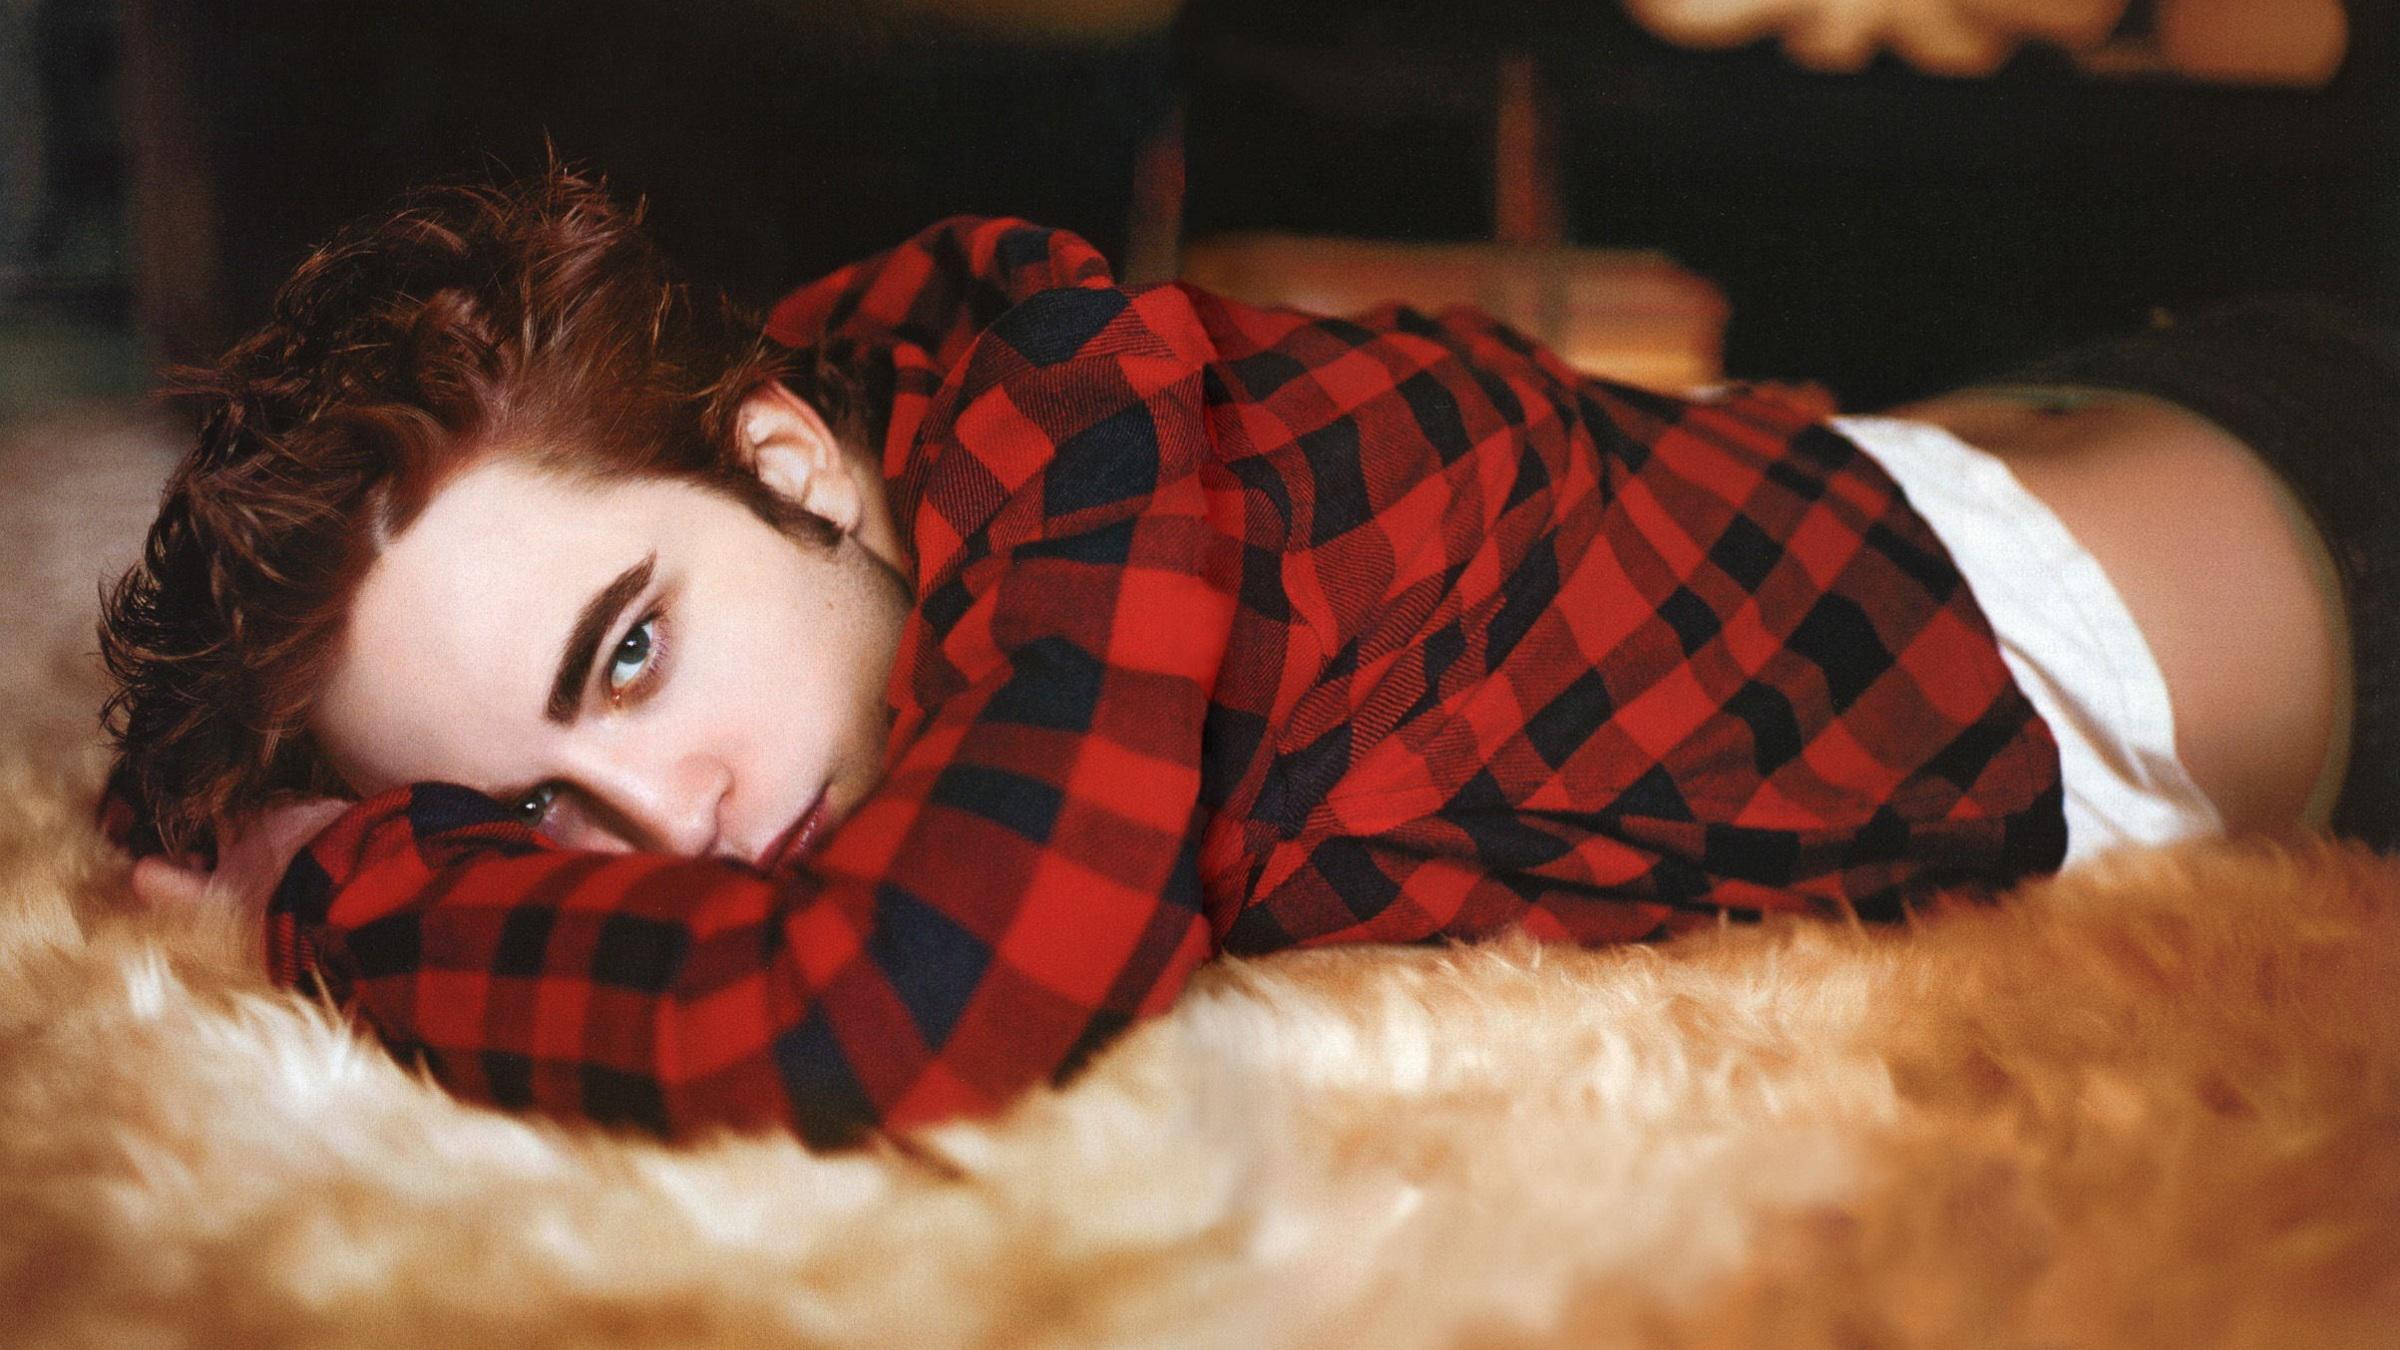 Robert Pattinson Laying Down, red and black plaid print shirt